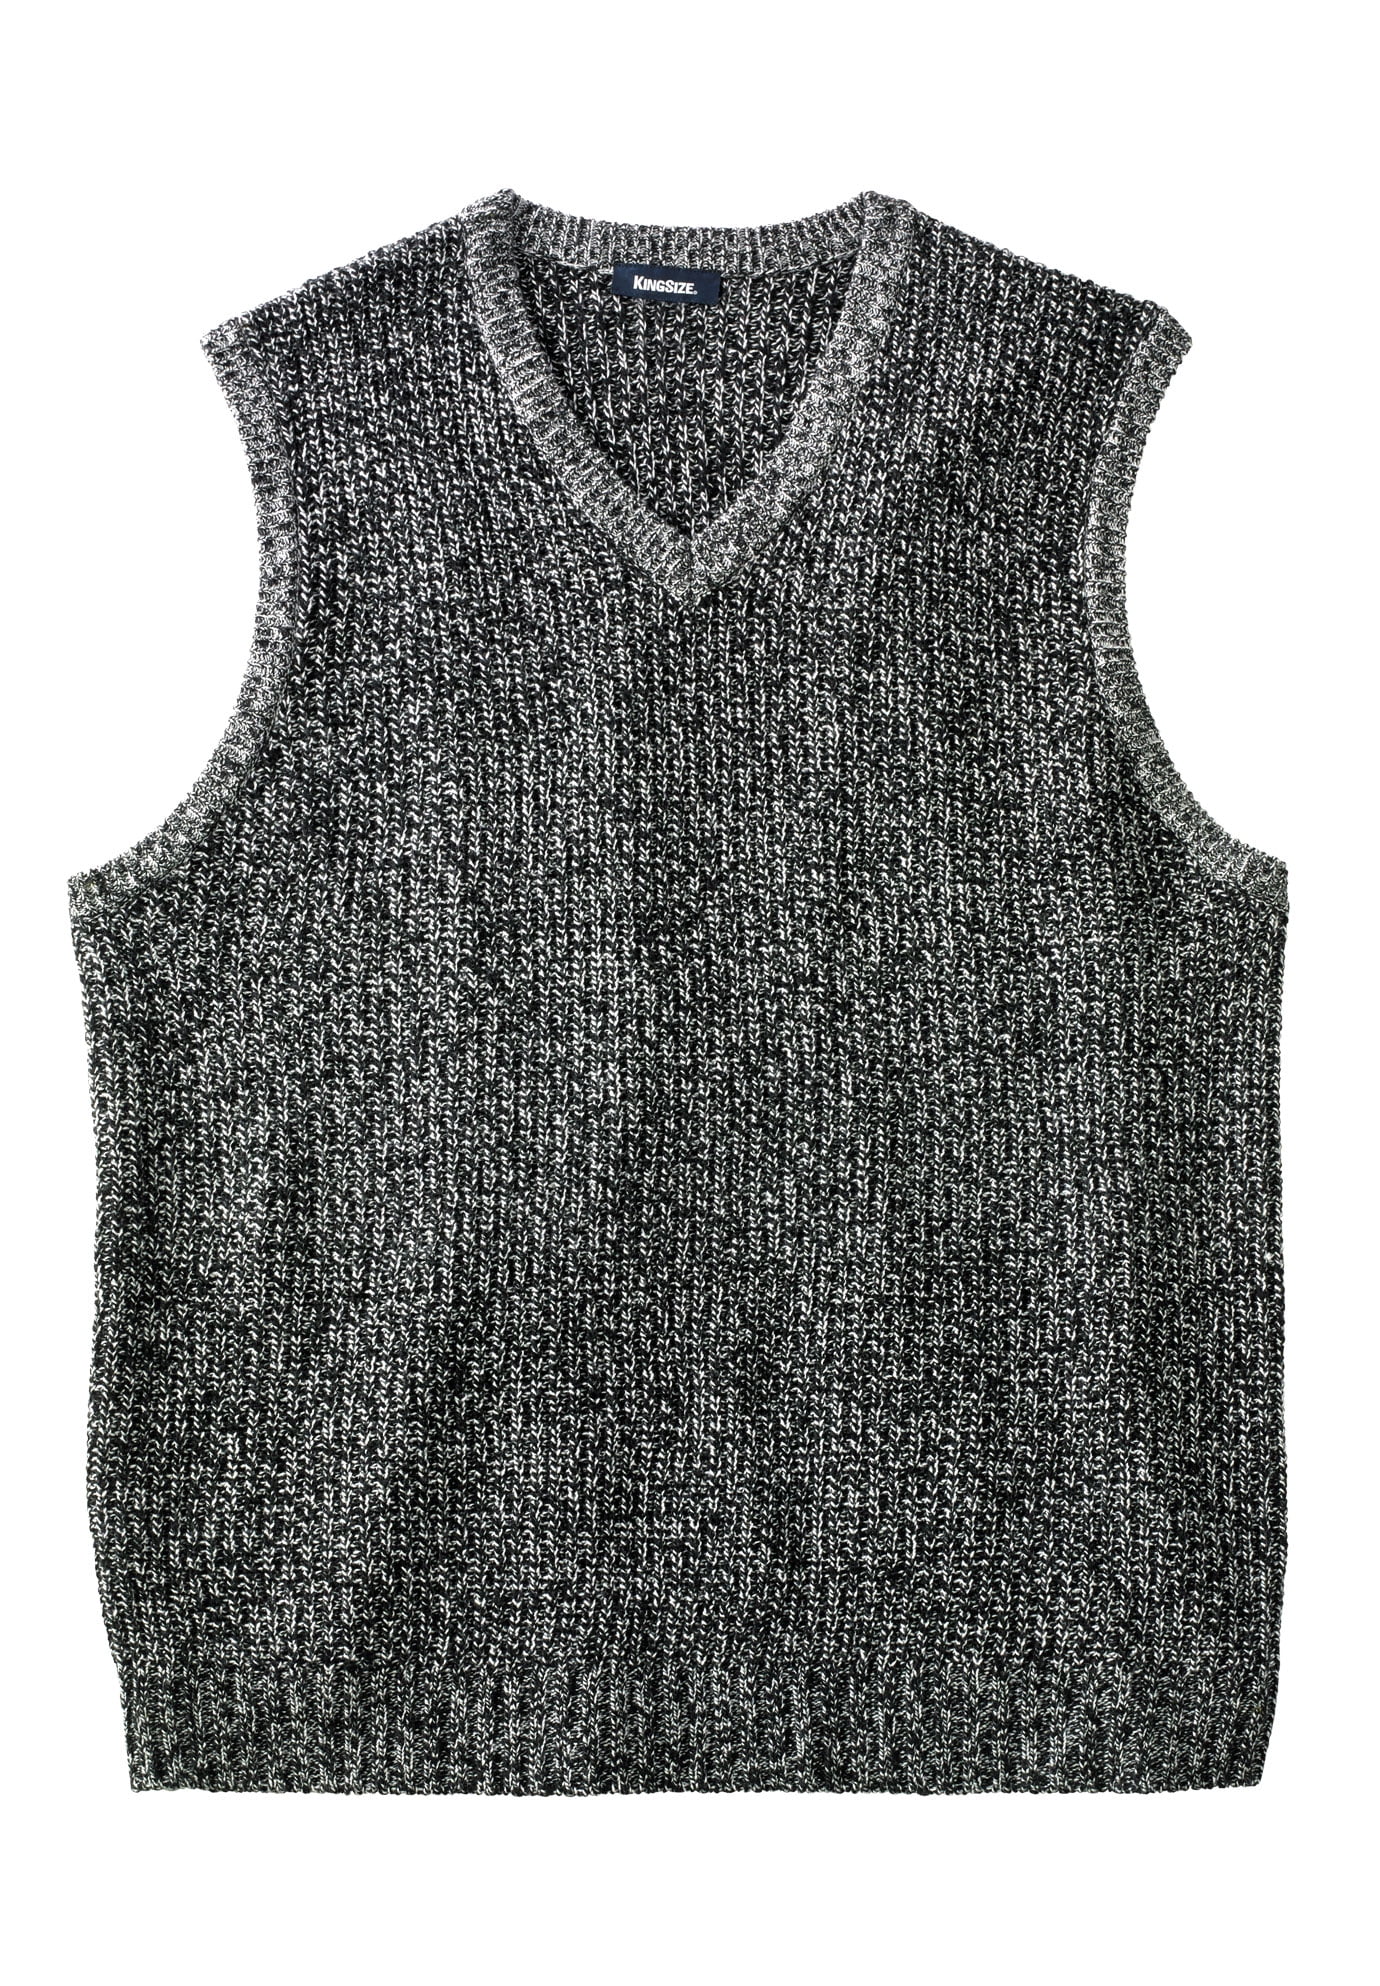 Kingsize Men's Big & Tall Shaker Knit V-Neck Sweater Vest - Walmart.com